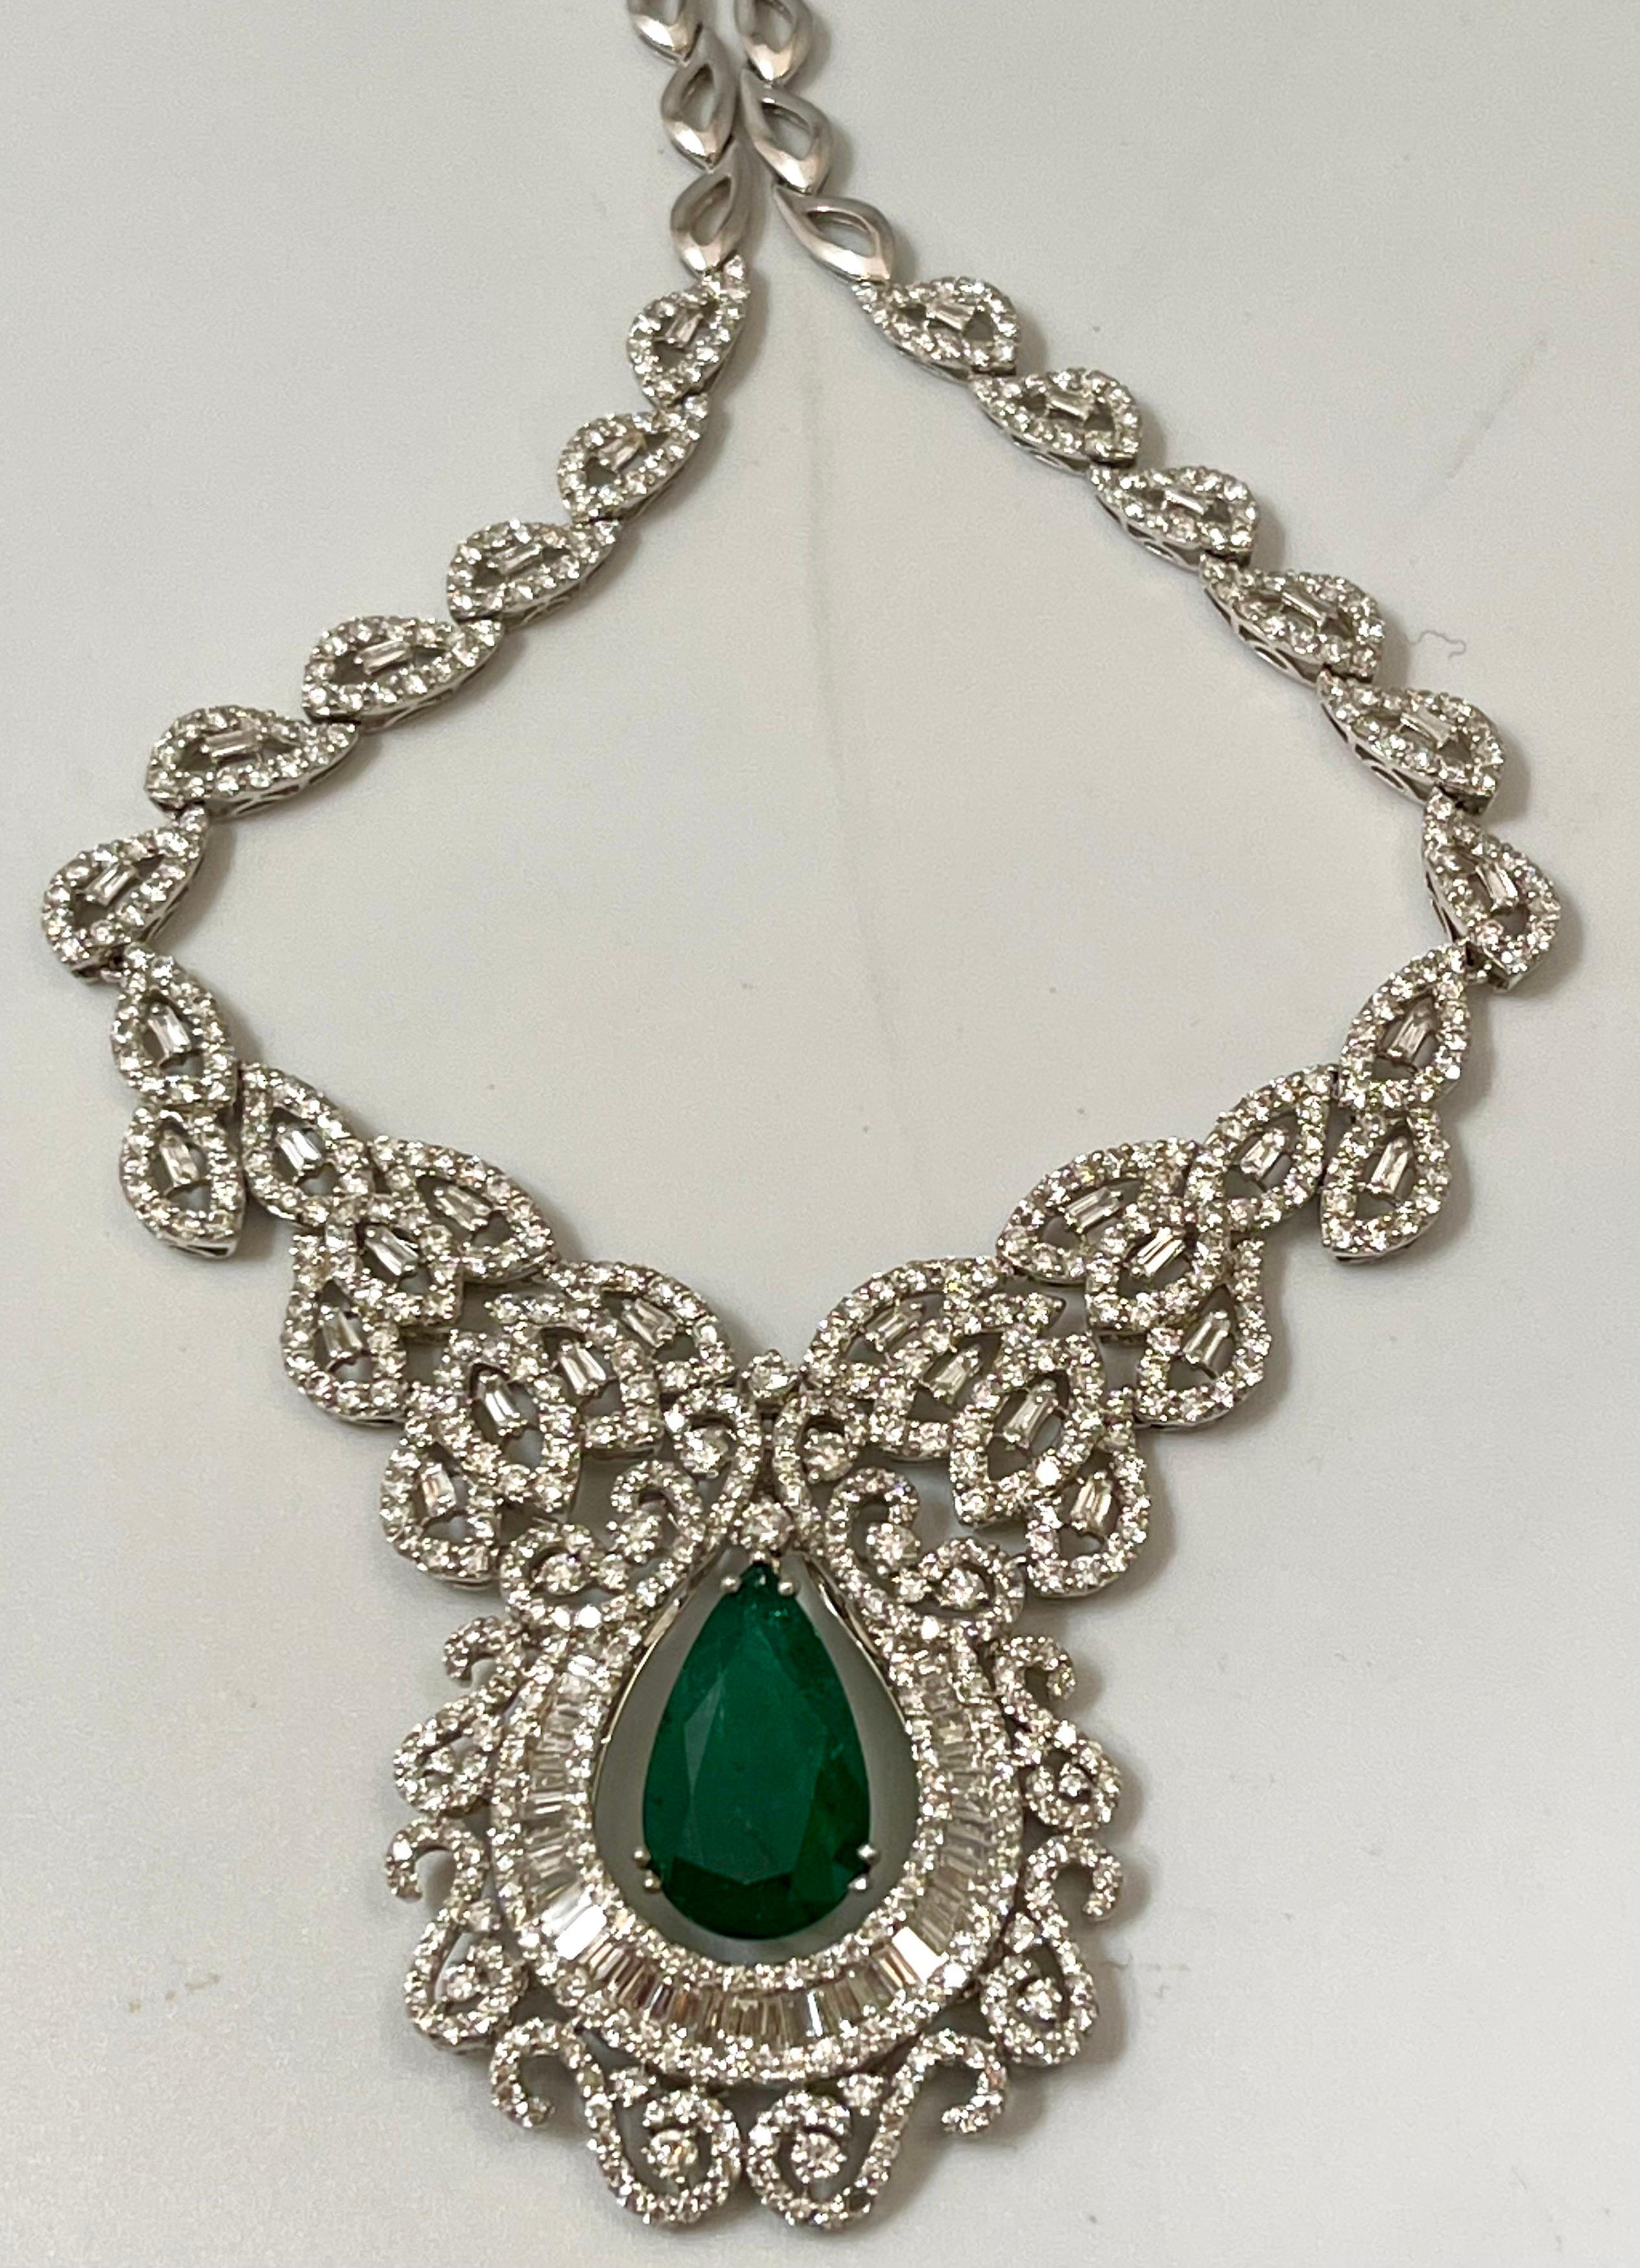 11 Ct Pear Shape Zambian Natural Emerald & 17 Ct Diamond Necklace 18 Karat Gold For Sale 1